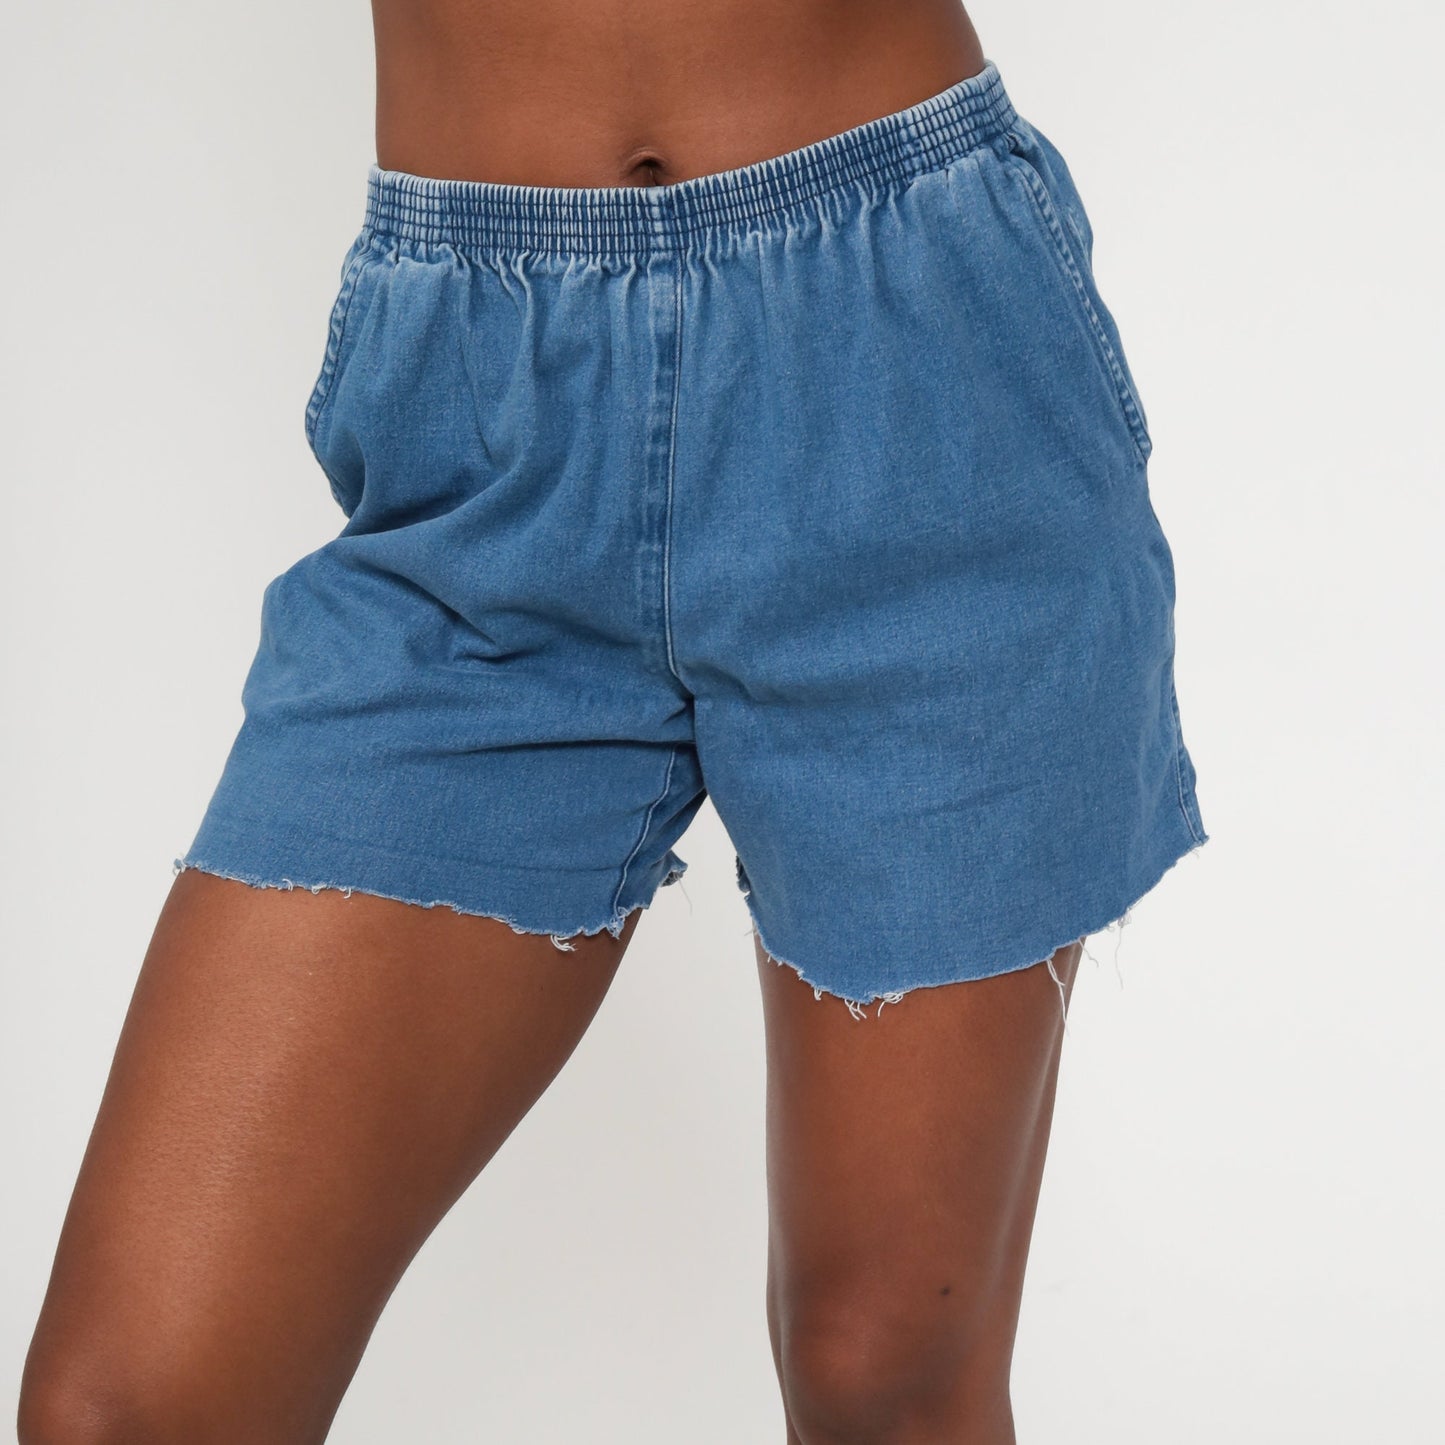 Frayed Jean Shorts Cutoff Denim Shorts 80s High Waisted Elastic Hotpants Jogging Boho Hot Pants 1980s Vintage Bohemian Blue Small Medium